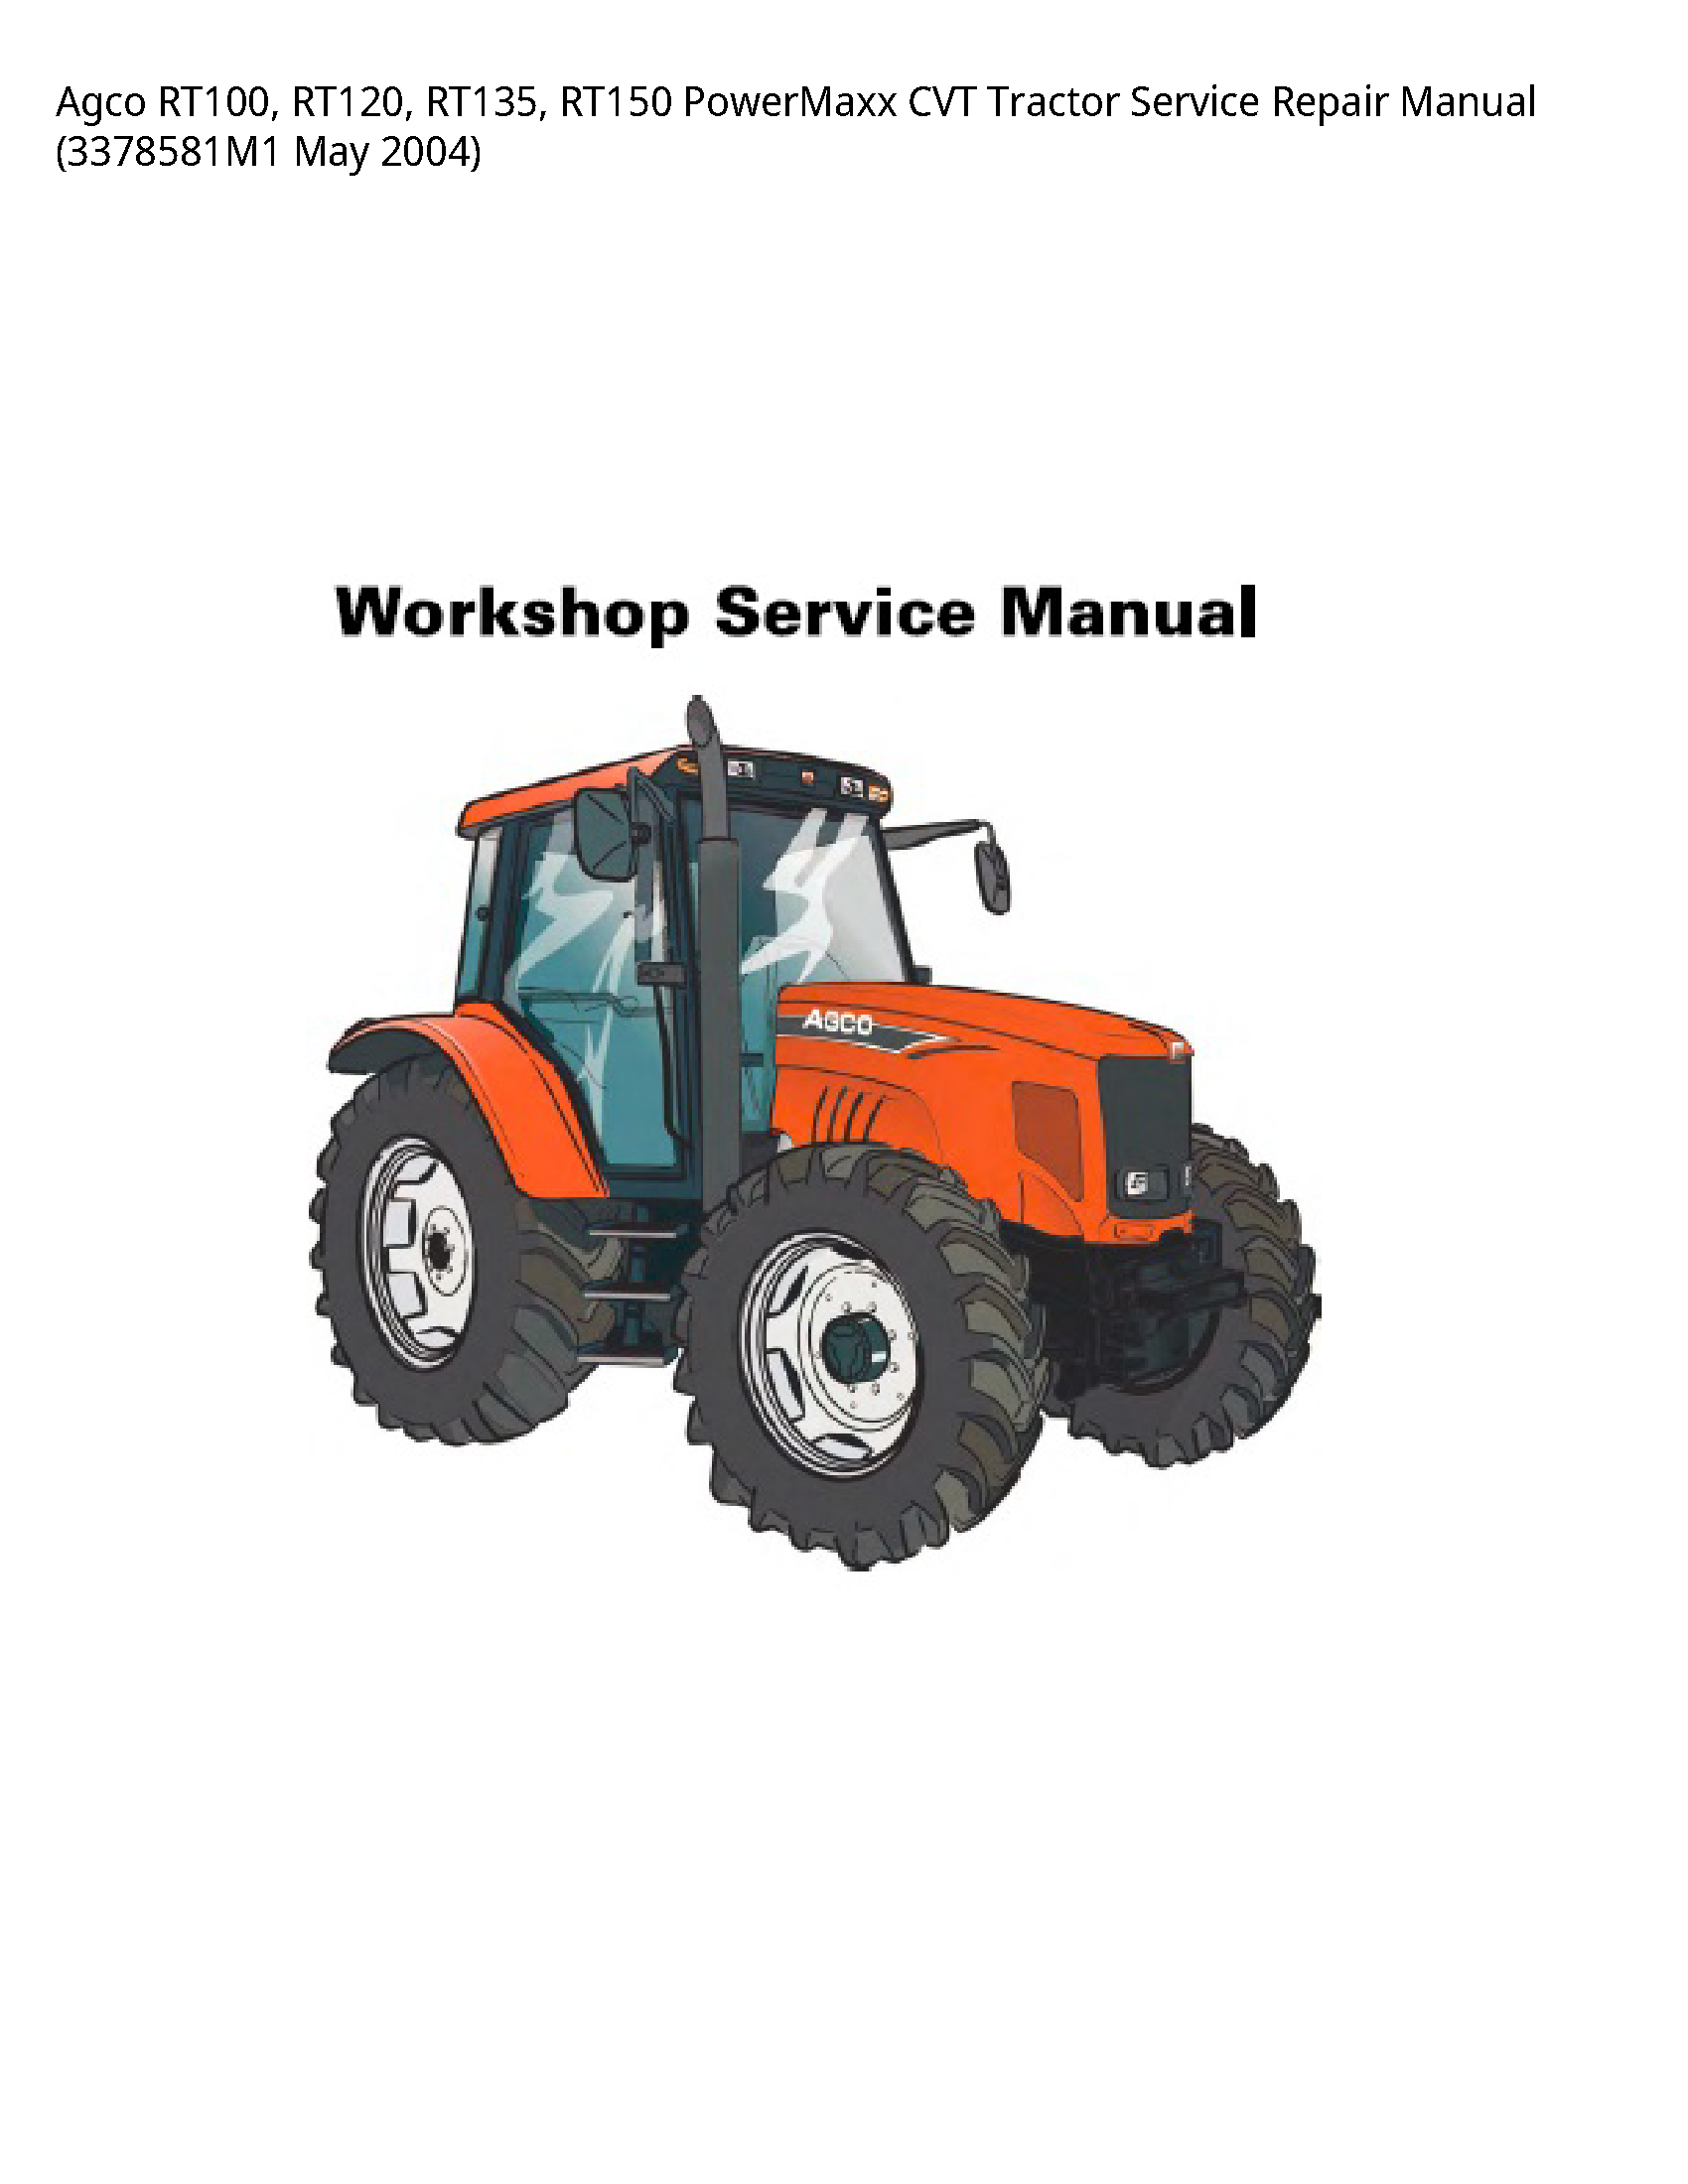 AGCO RT100 PowerMaxx CVT Tractor manual